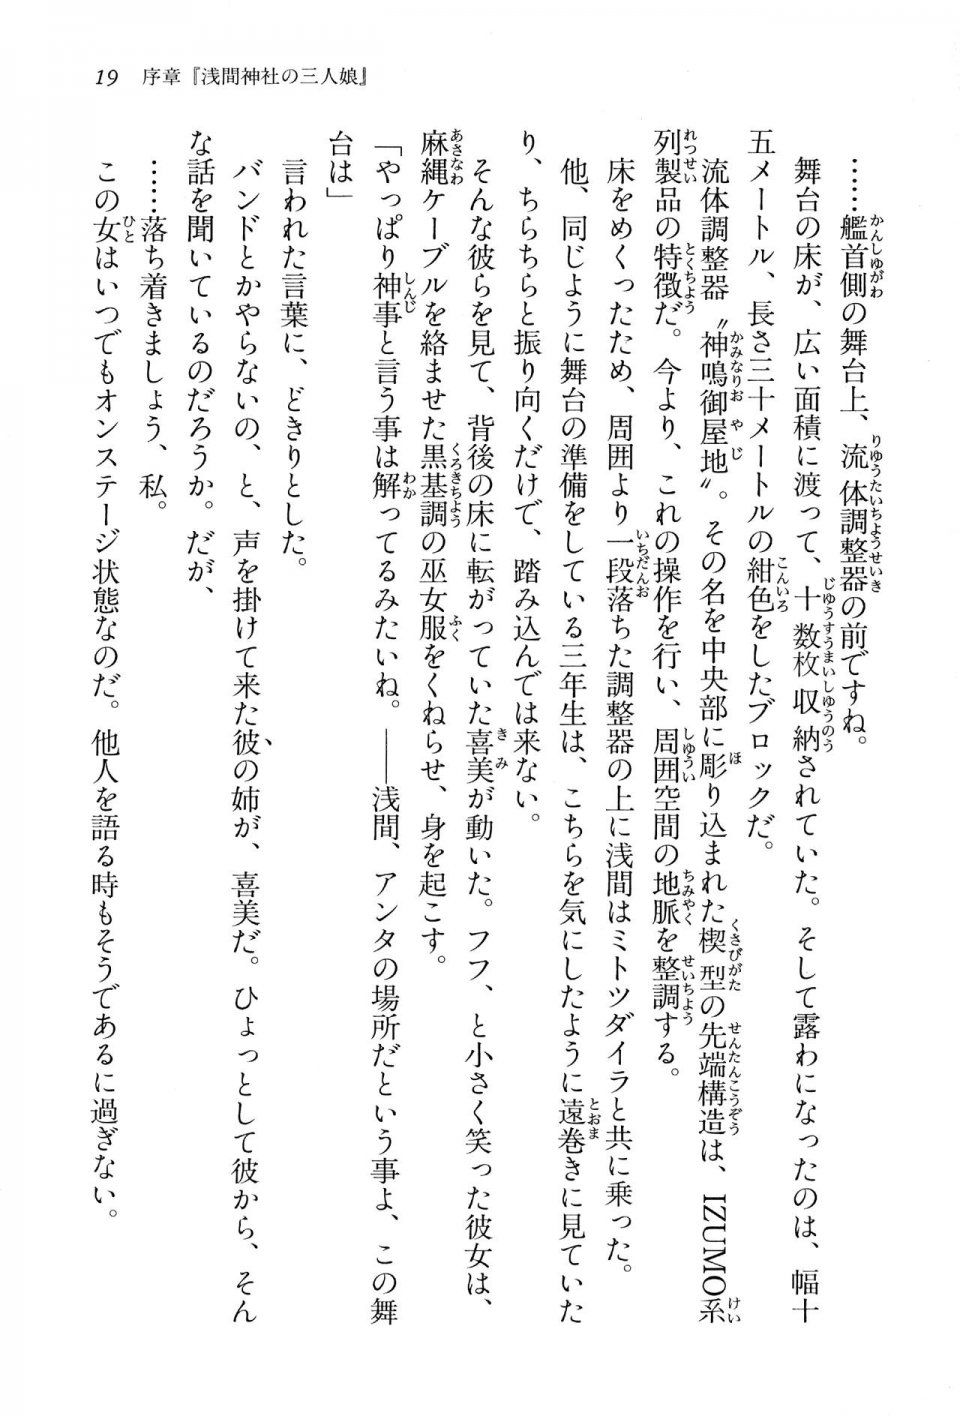 Kyoukai Senjou no Horizon BD Special Mininovel Vol 1(1A) - Photo #23